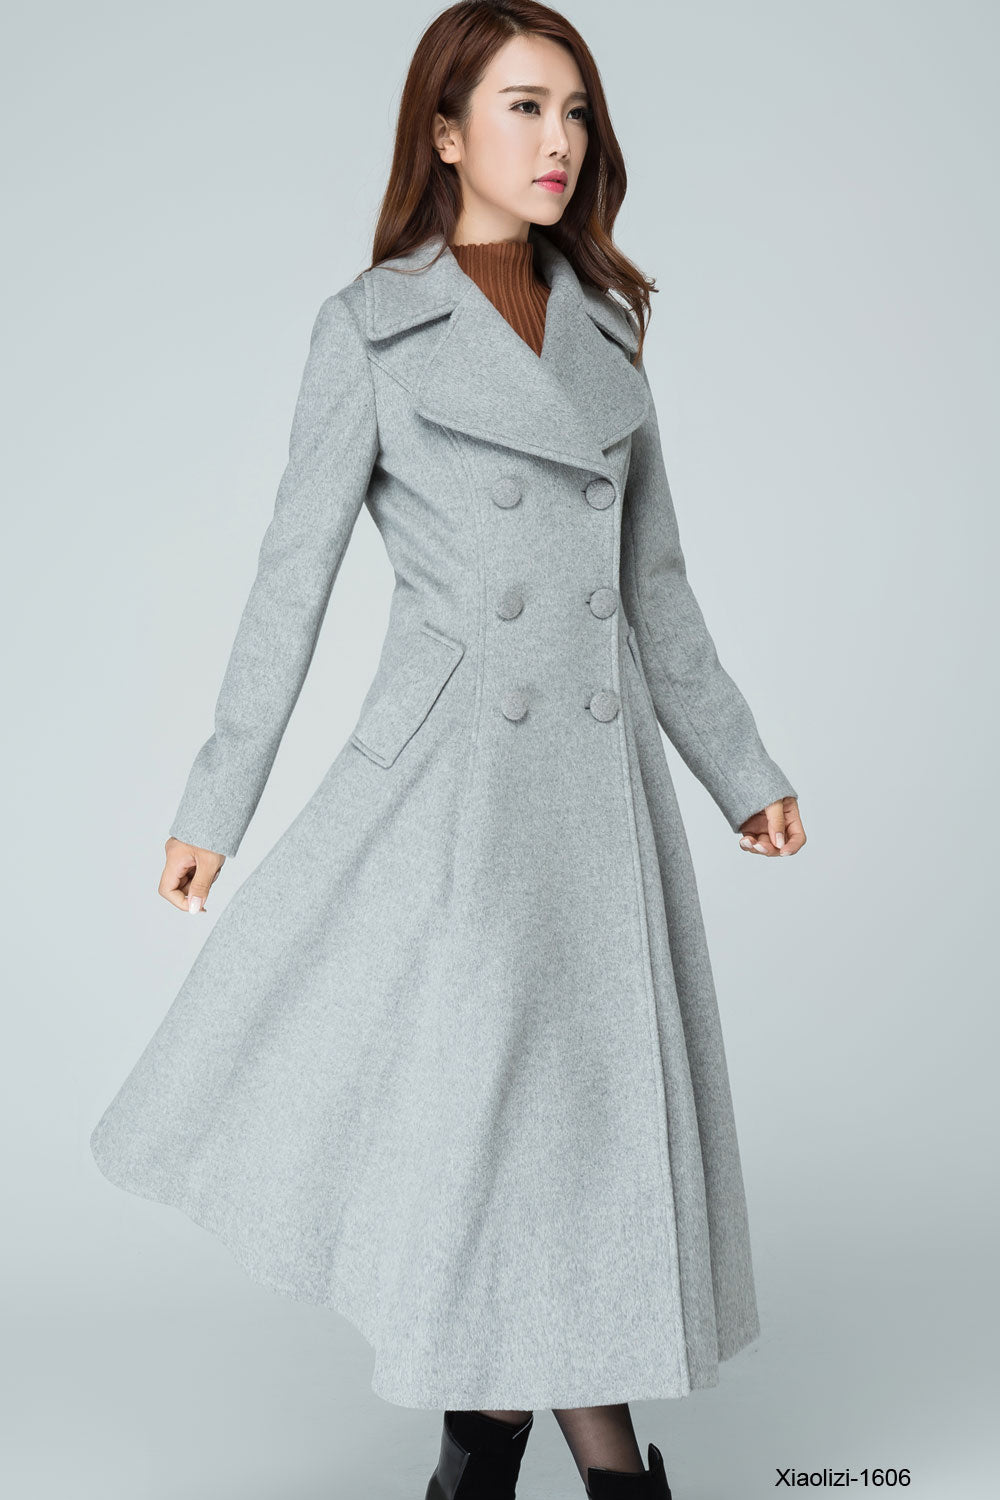 Long Wool Coat Women, Gray Wool Trench Coat, Double Breasted Wool Maxi Coat,  Winter Coat Women, Autumn Winter Outerwear, Ylistyle C1766 